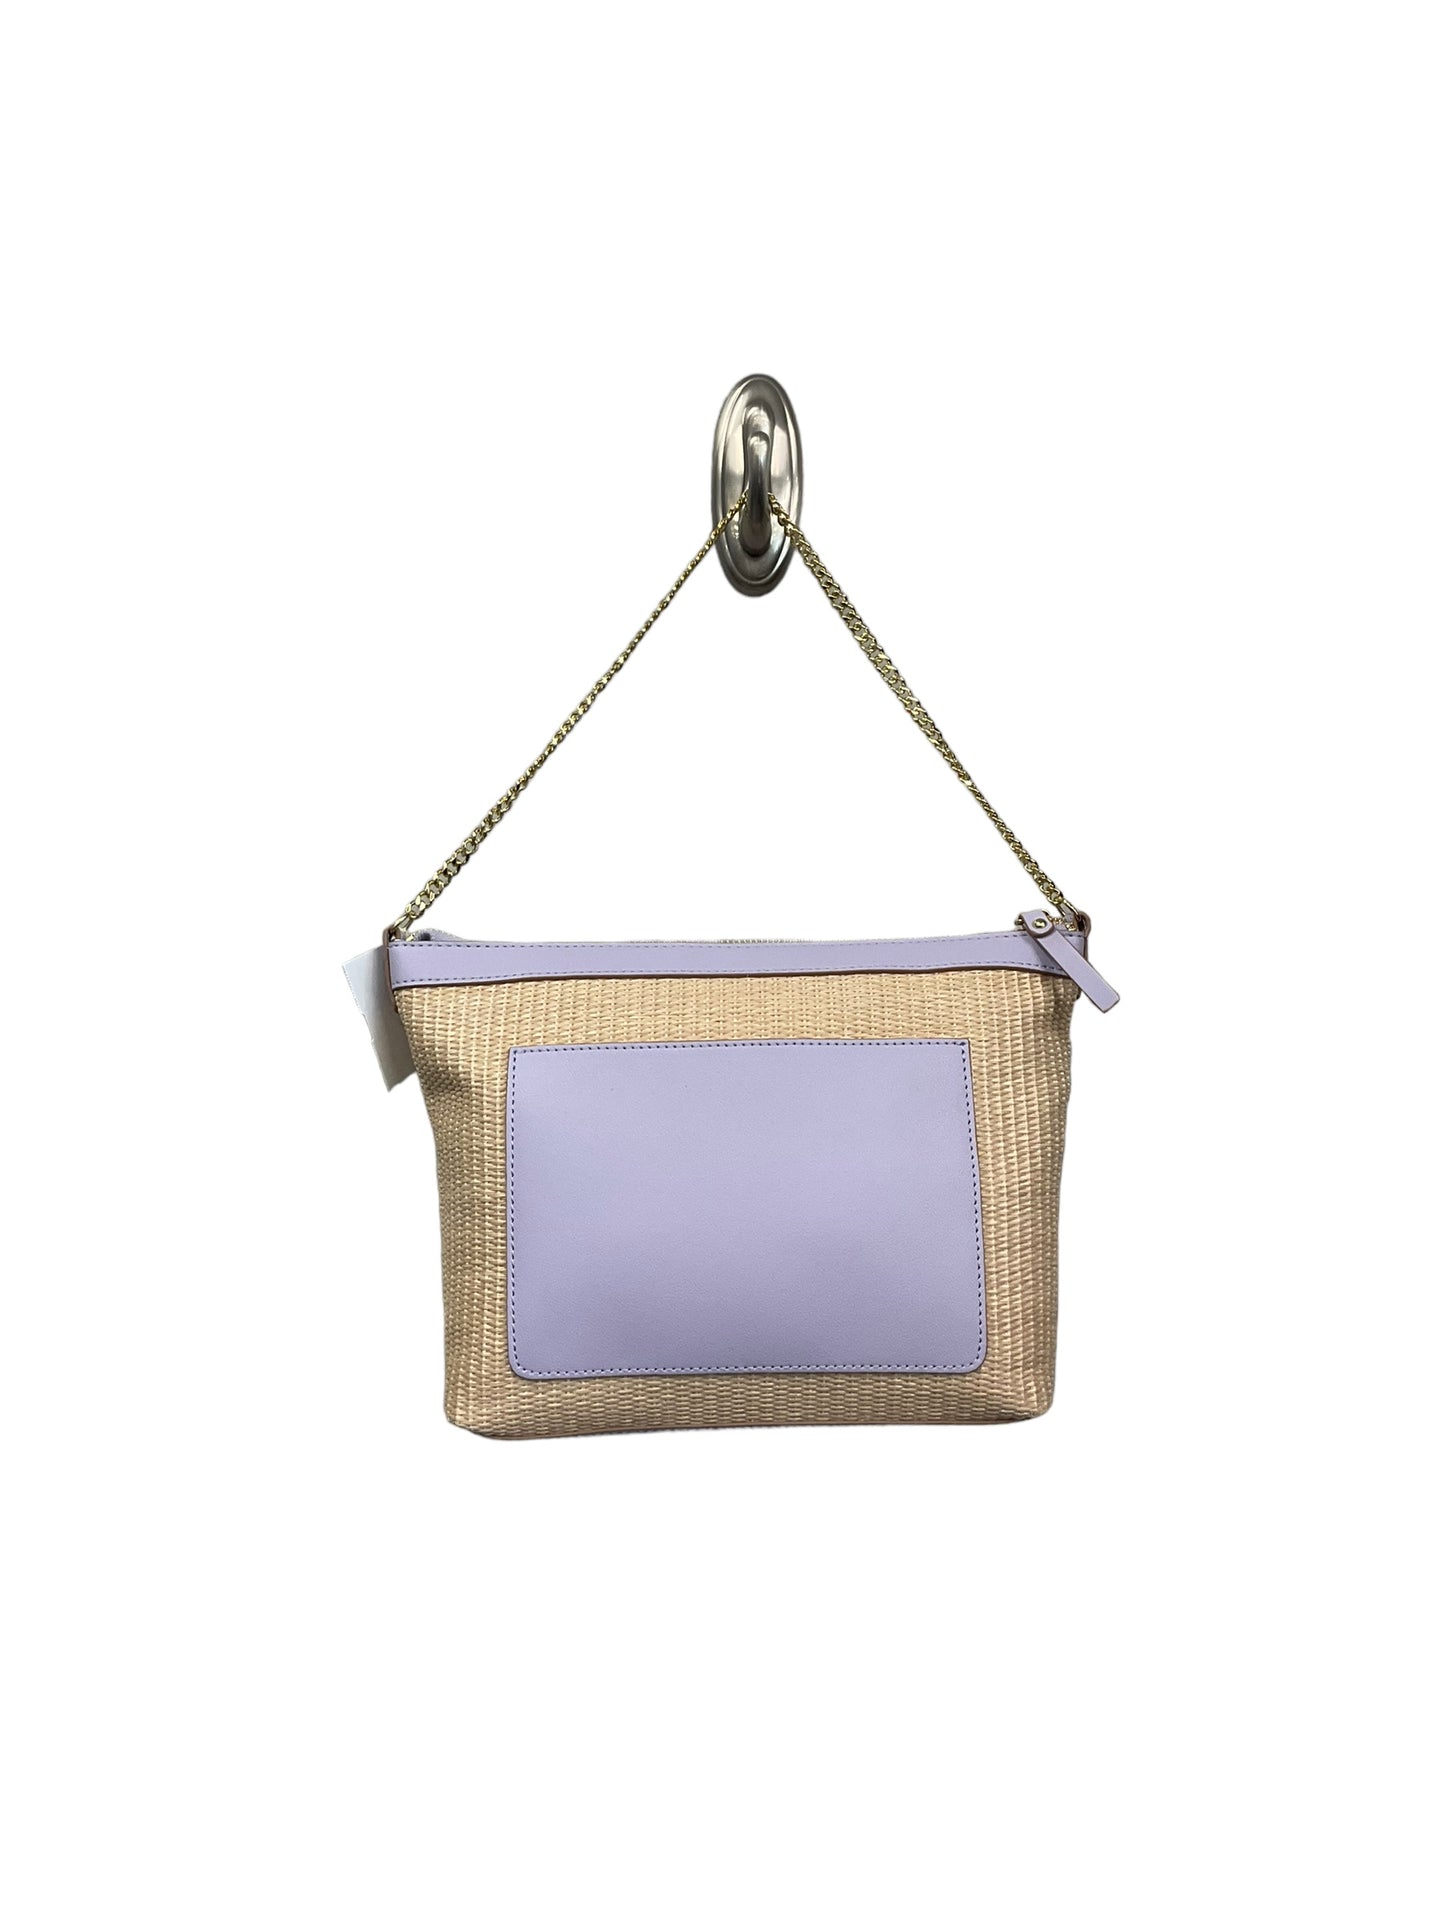 Handbag By Nanette By Nanette Lepore  Size: Medium